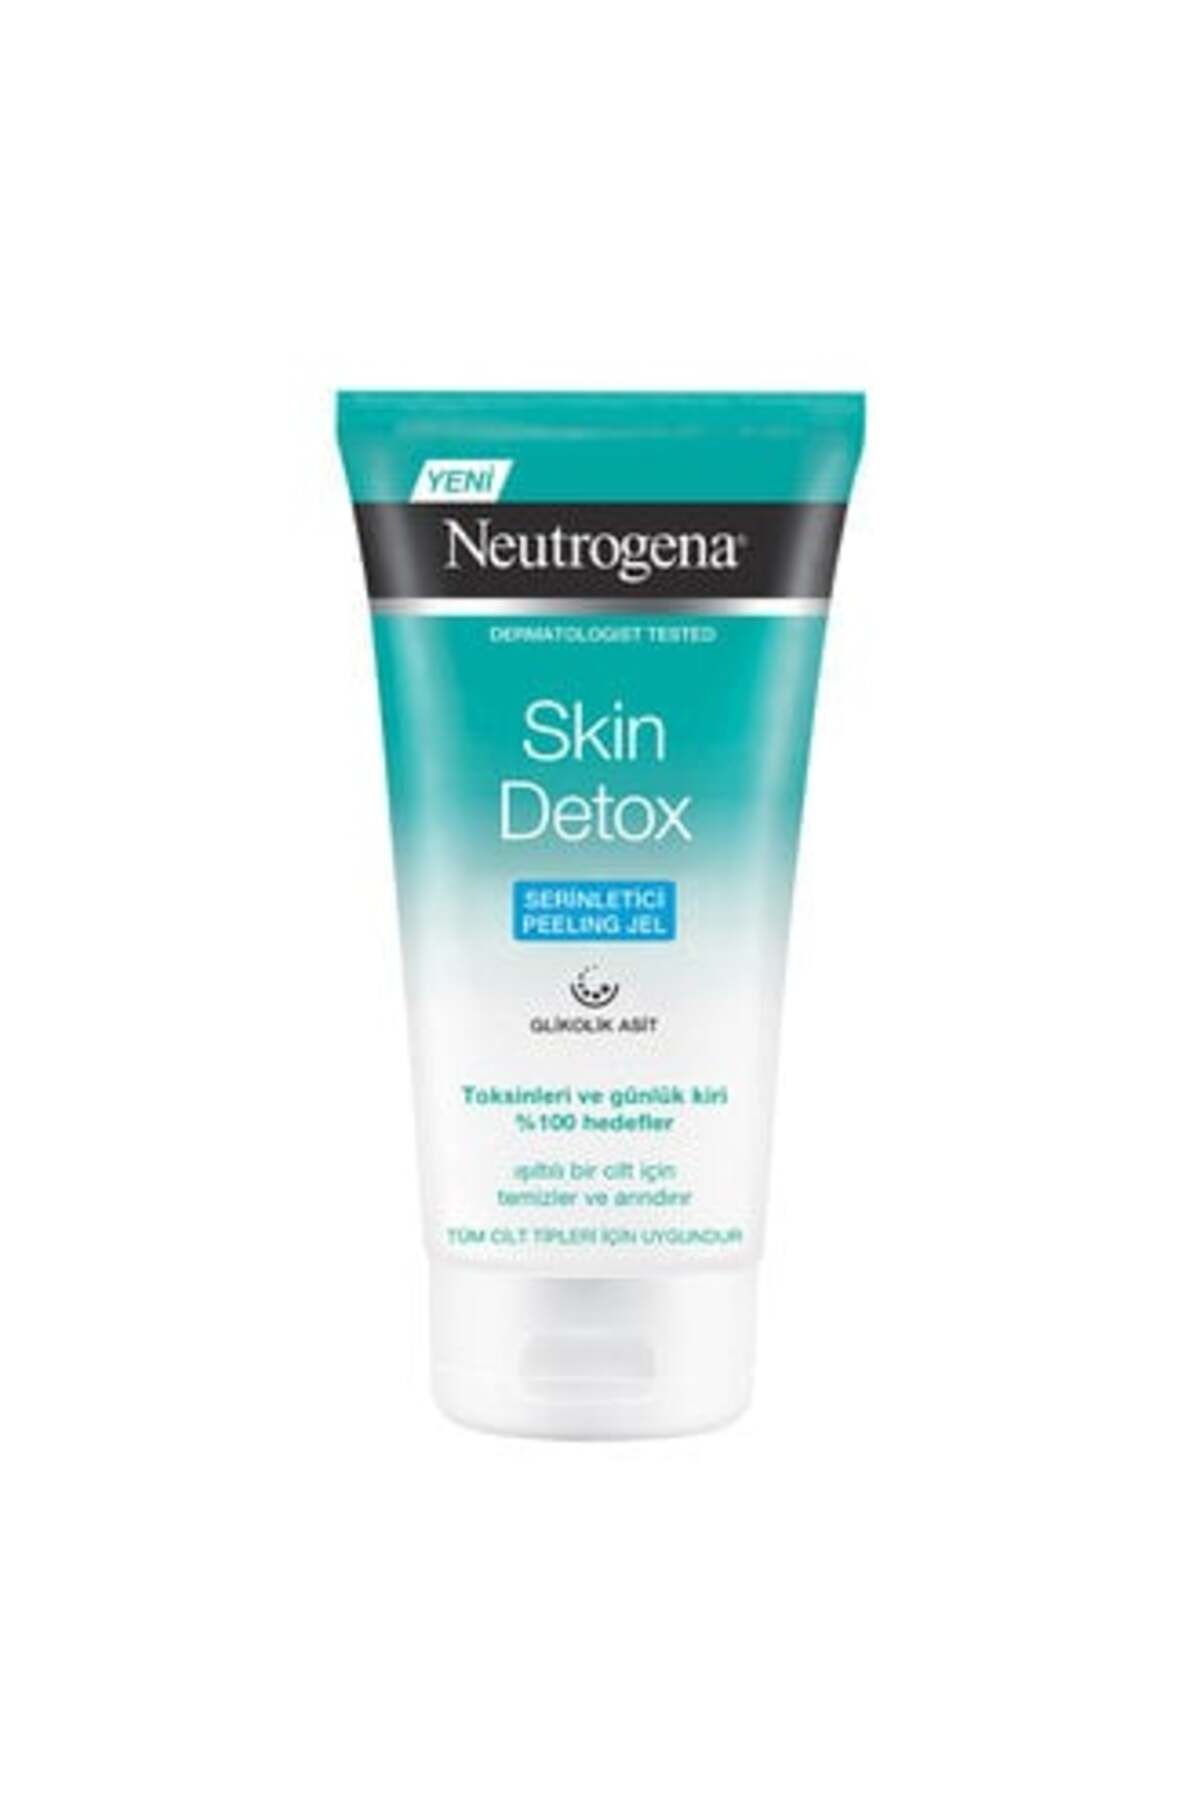 Neutrogena Skin Detox Serinletici Peeling Jel 150 ml ( 1 ADET )